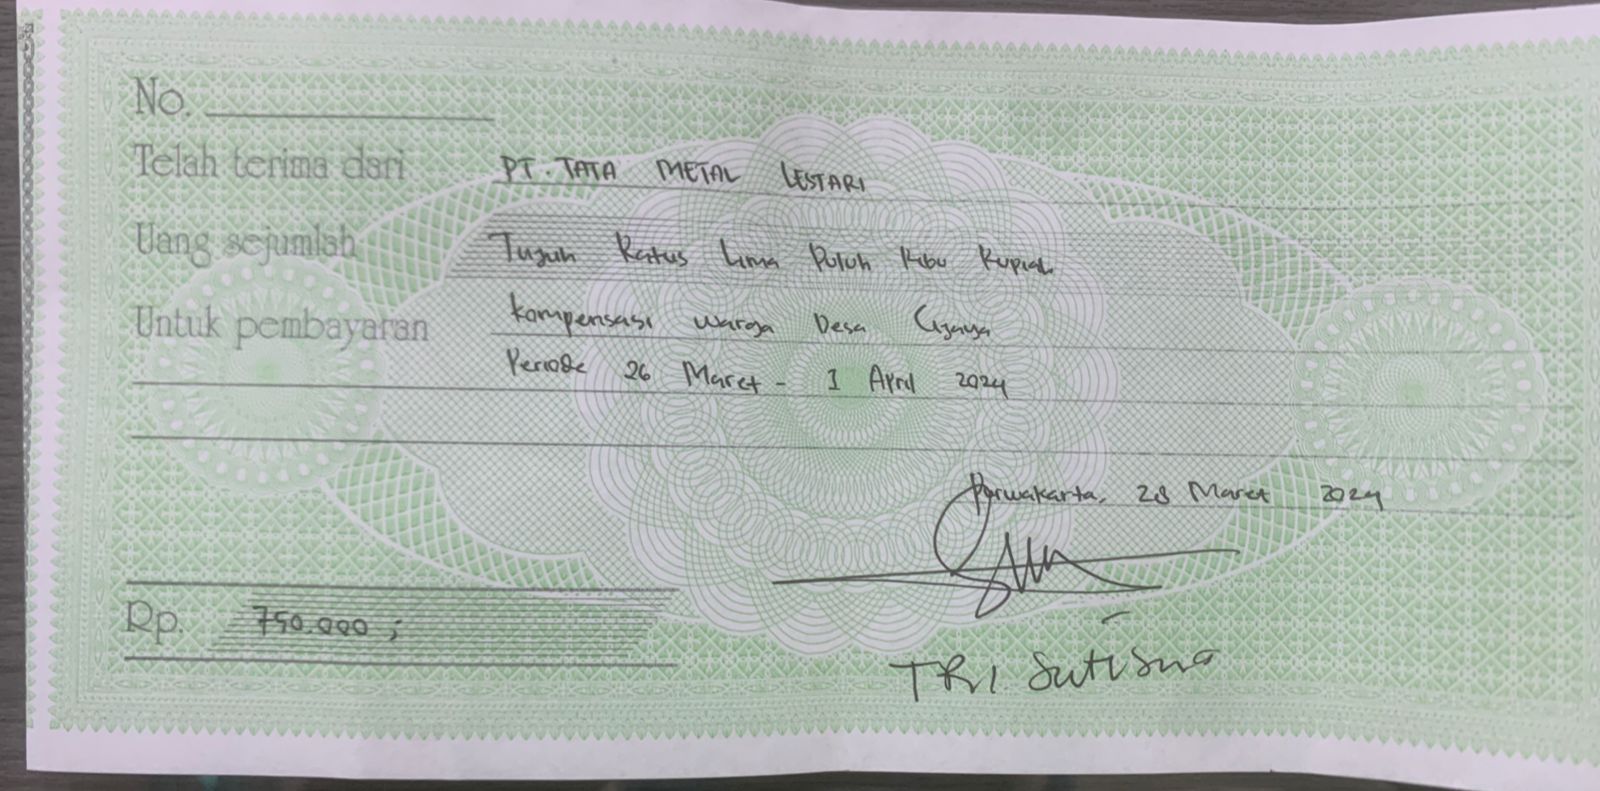 TML - Pemberian kompensasi kepada warga desa cijaya periode 26 Maret - 1 April 24